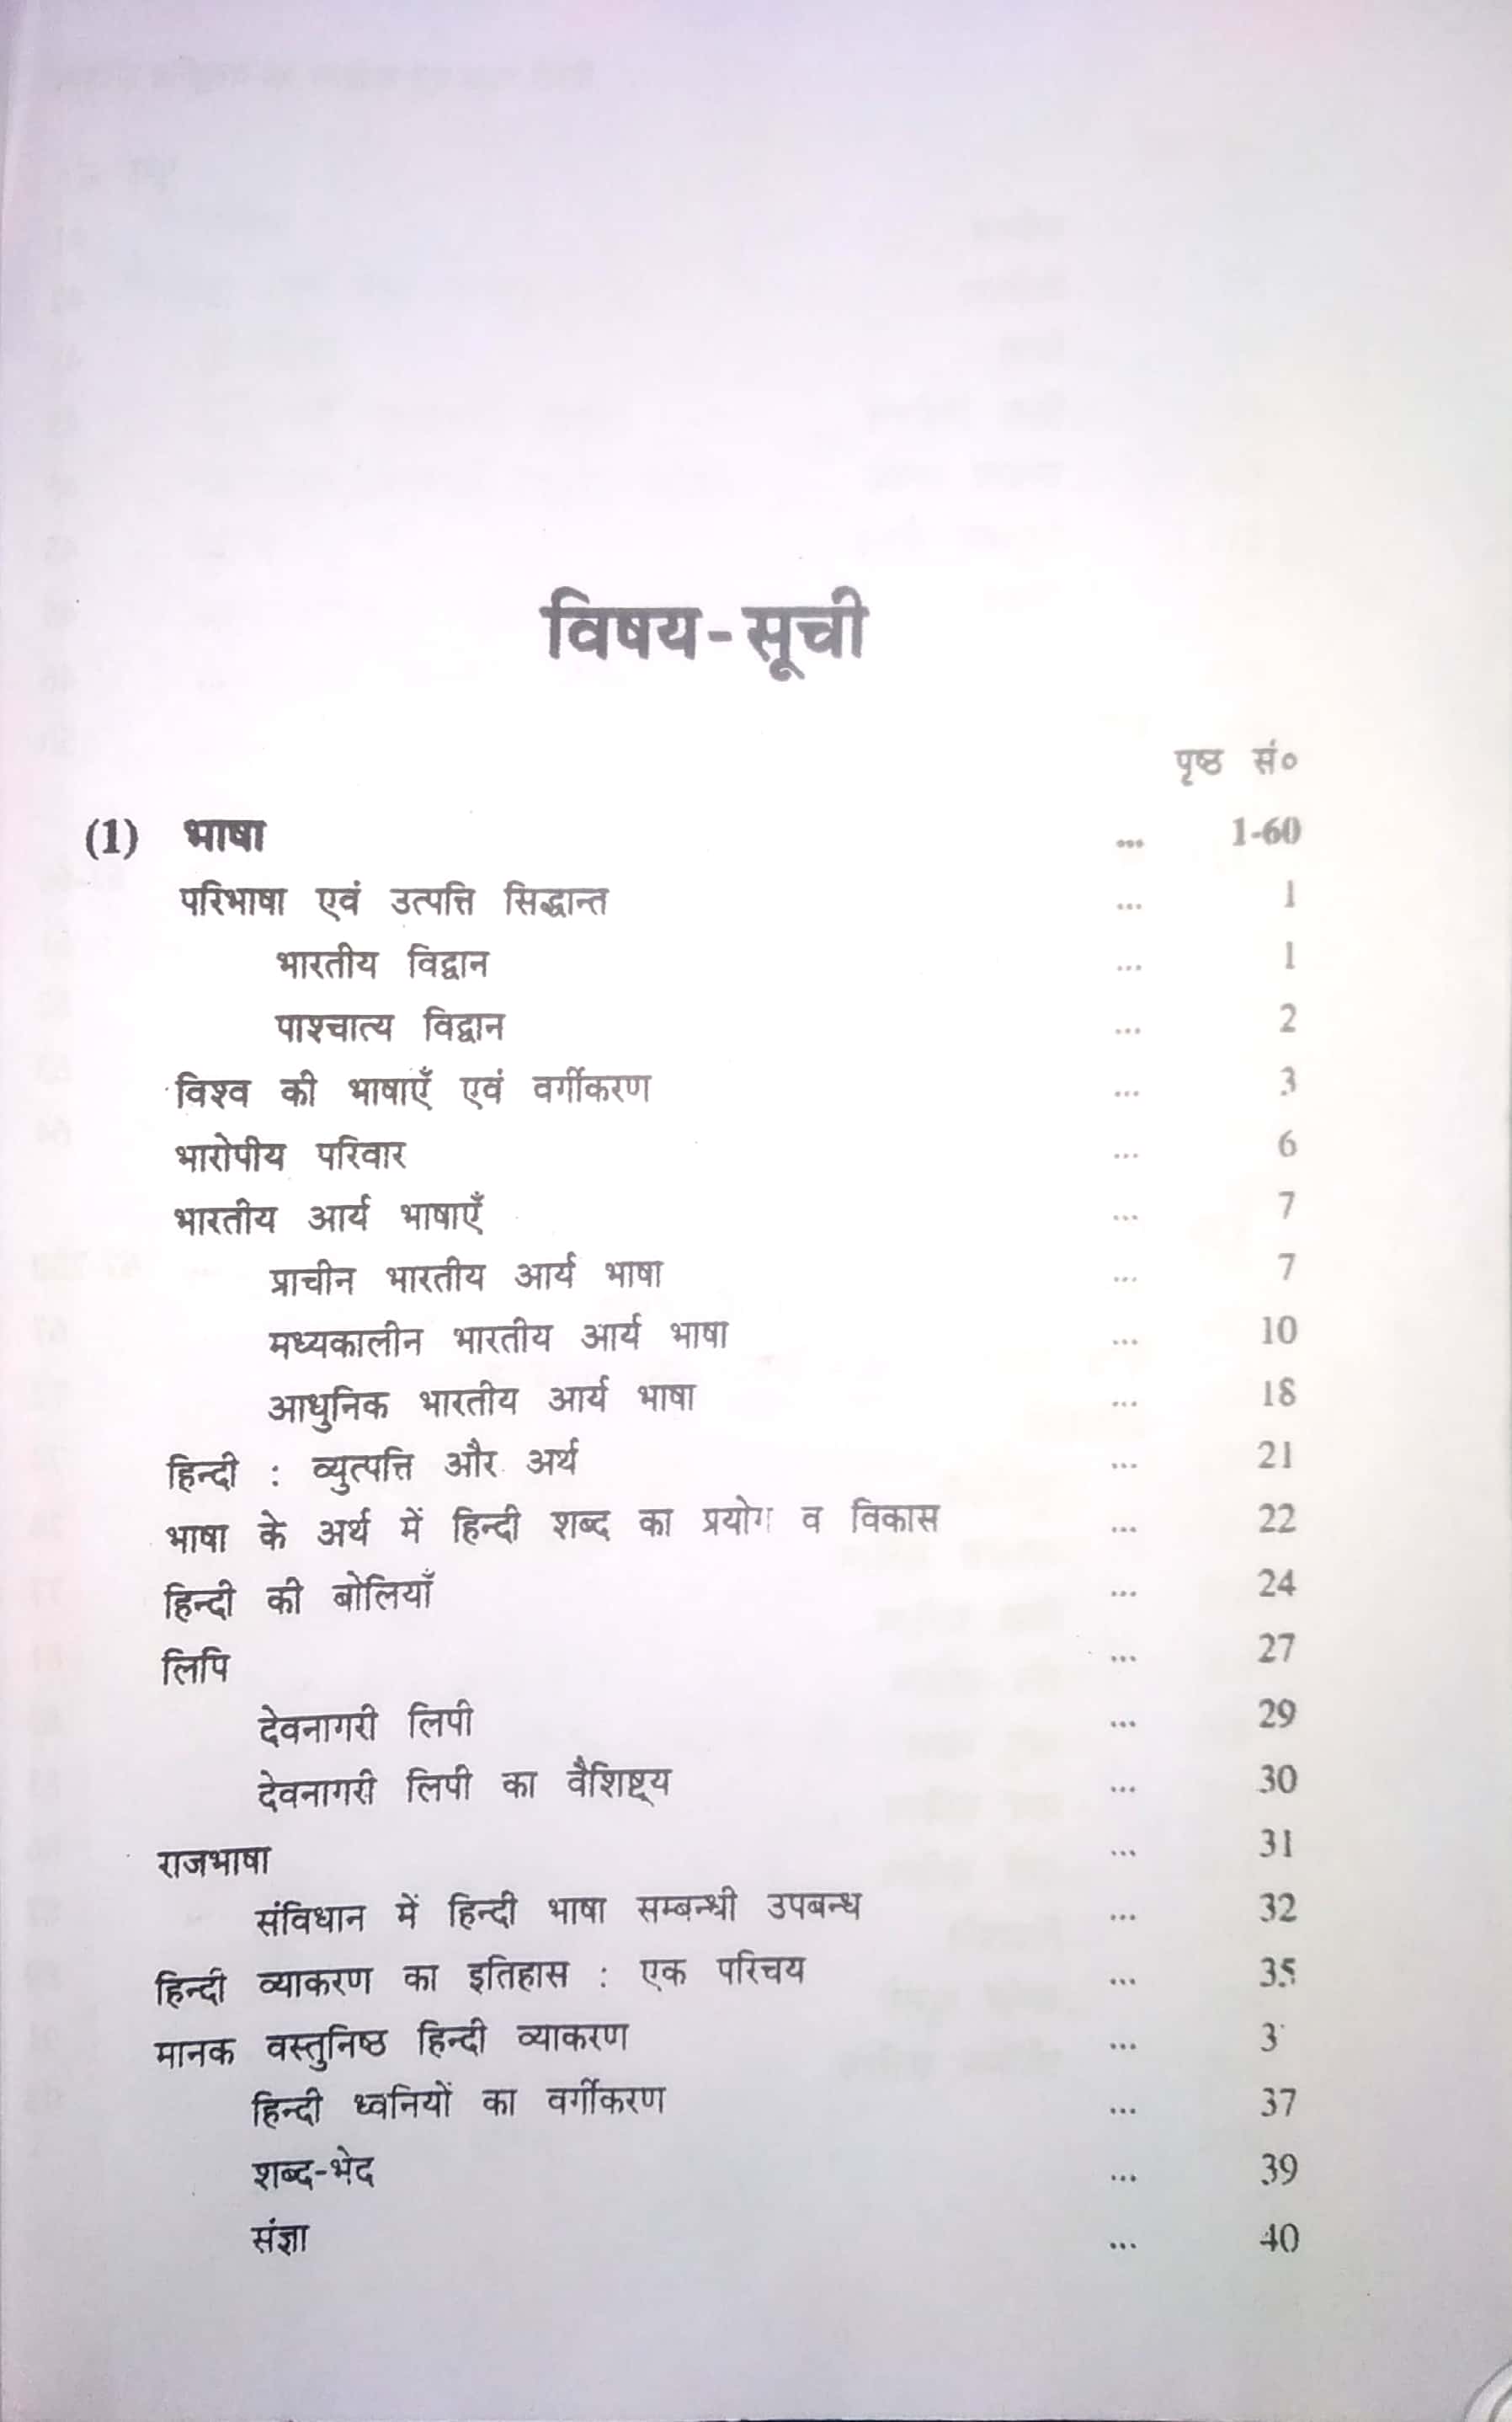 Abhivyakti Hindi Bhasha And Sahitya Ka Vastunisth Itihas (Objective History Of Hindi Language And Literature) By Saraswati Panday And Govind Panday Latest Edition